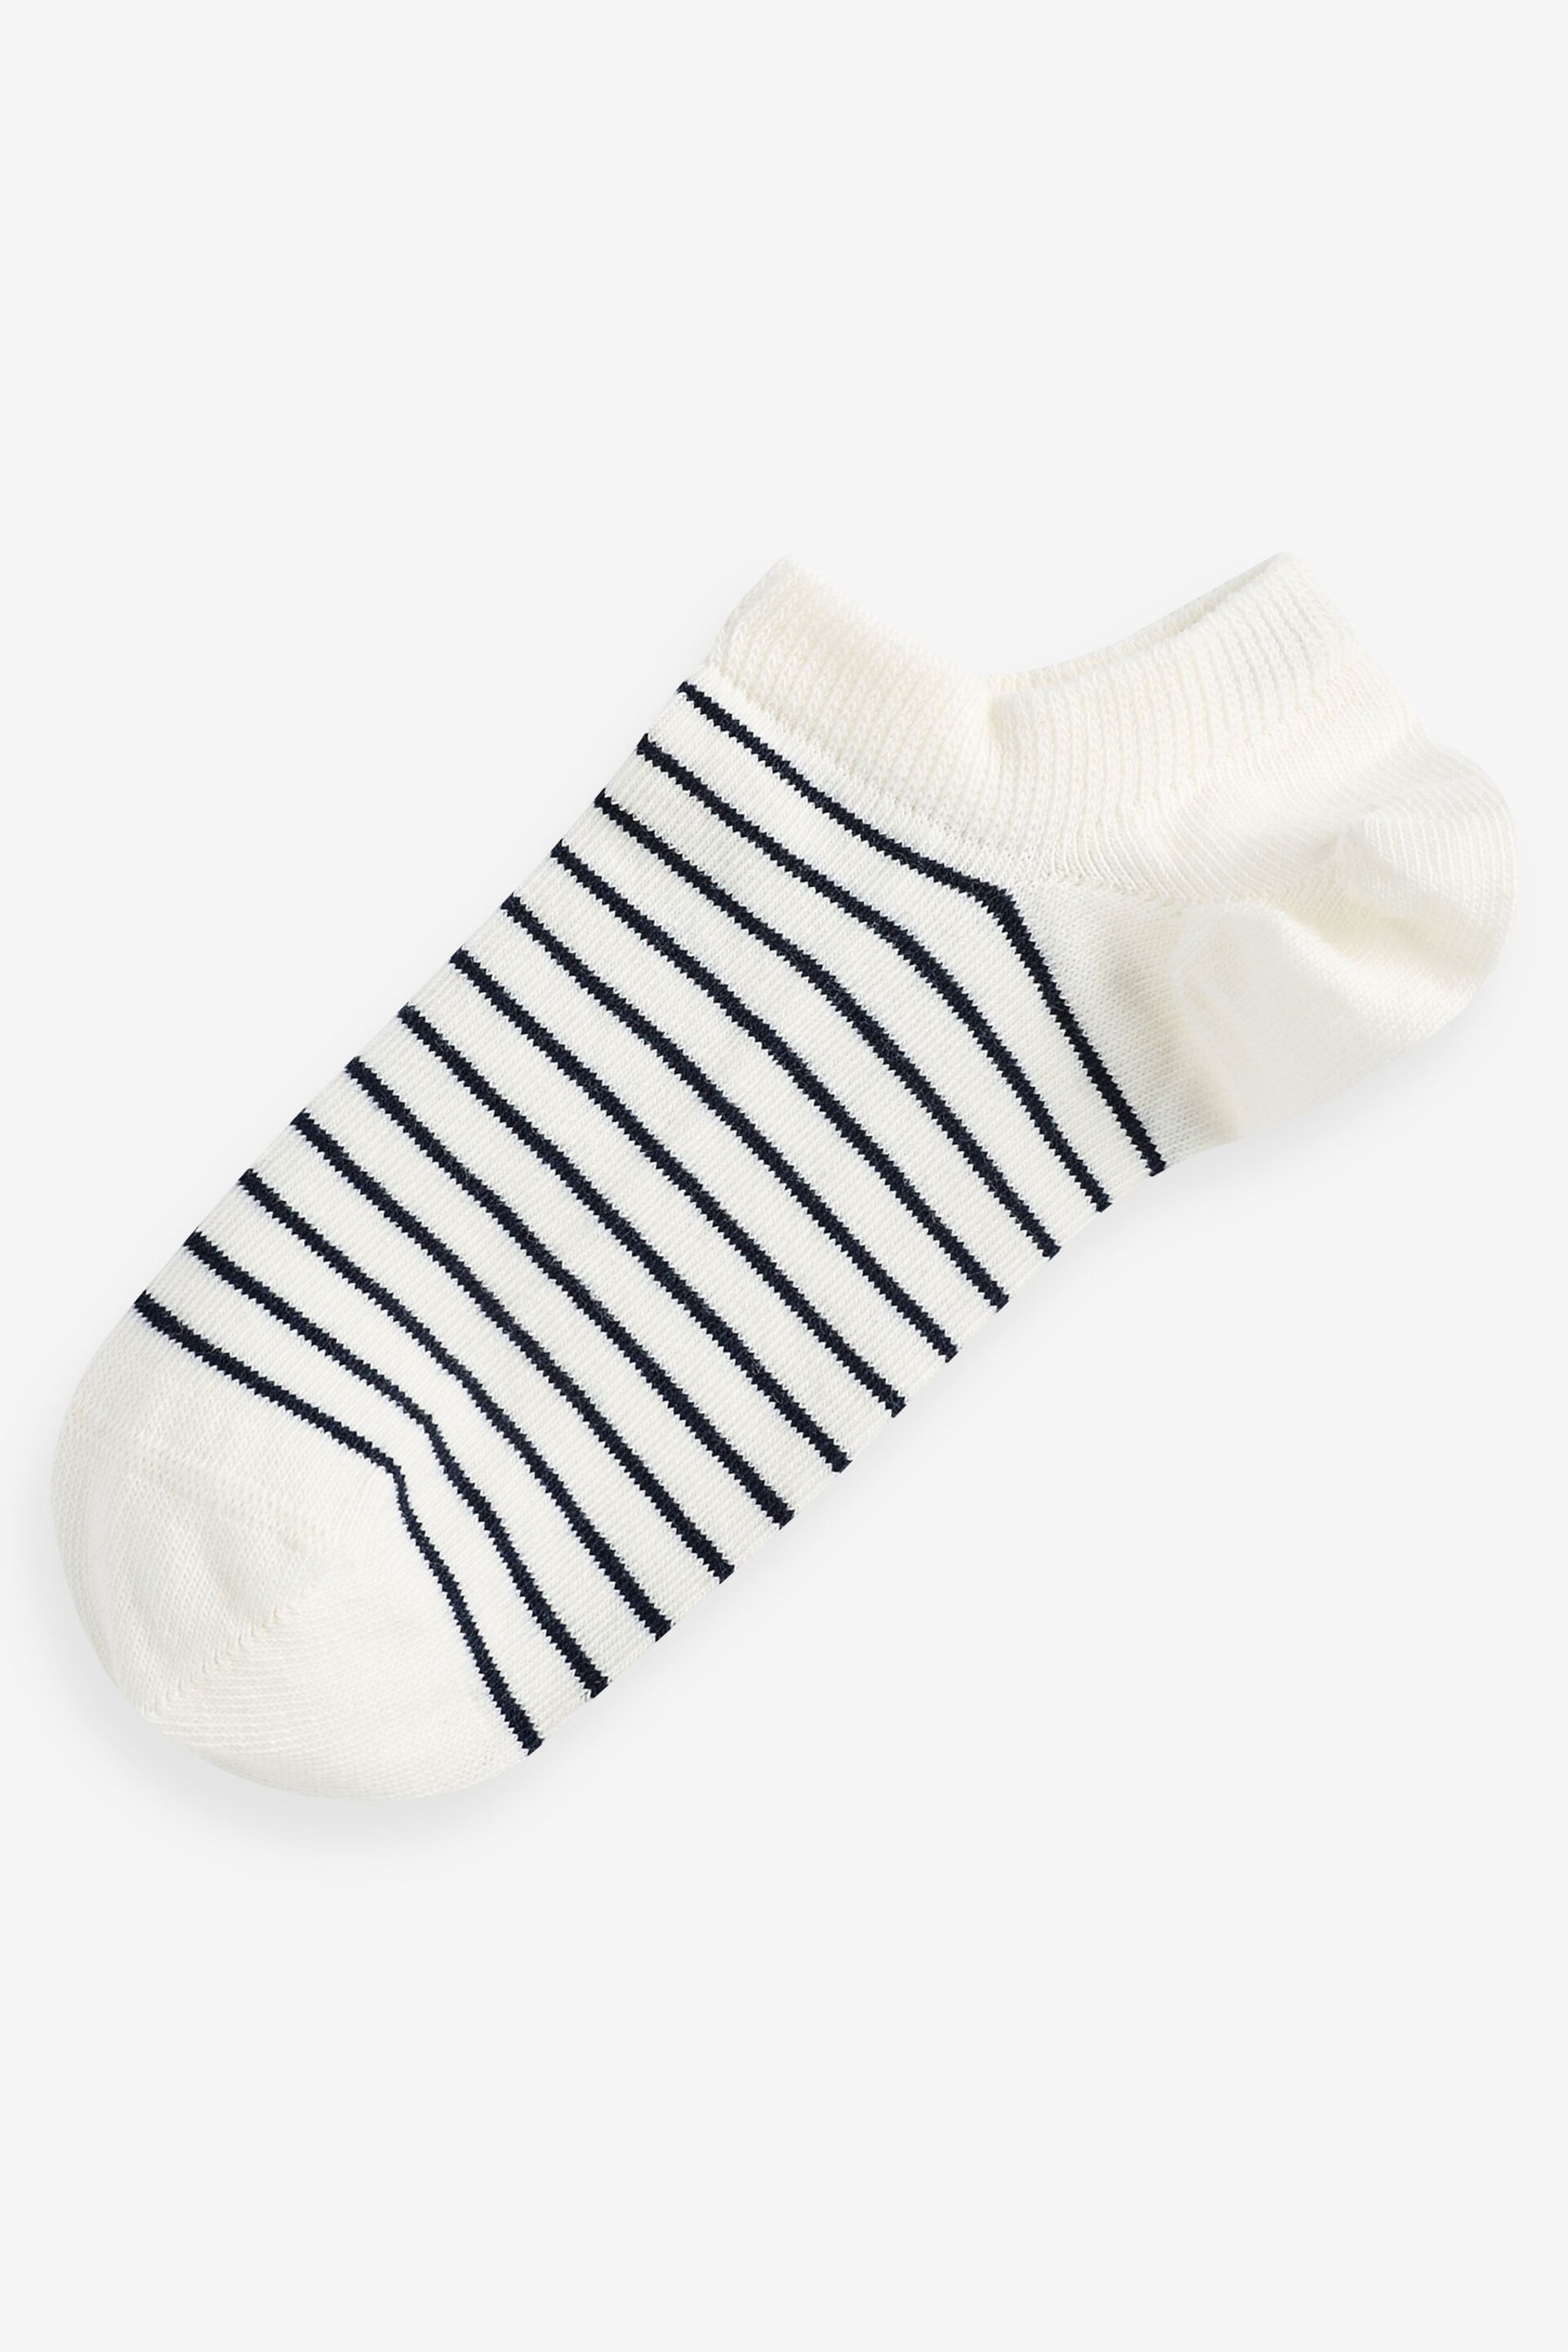 White/Blue Floral Trainer Socks 5 Pack - Image 6 of 6